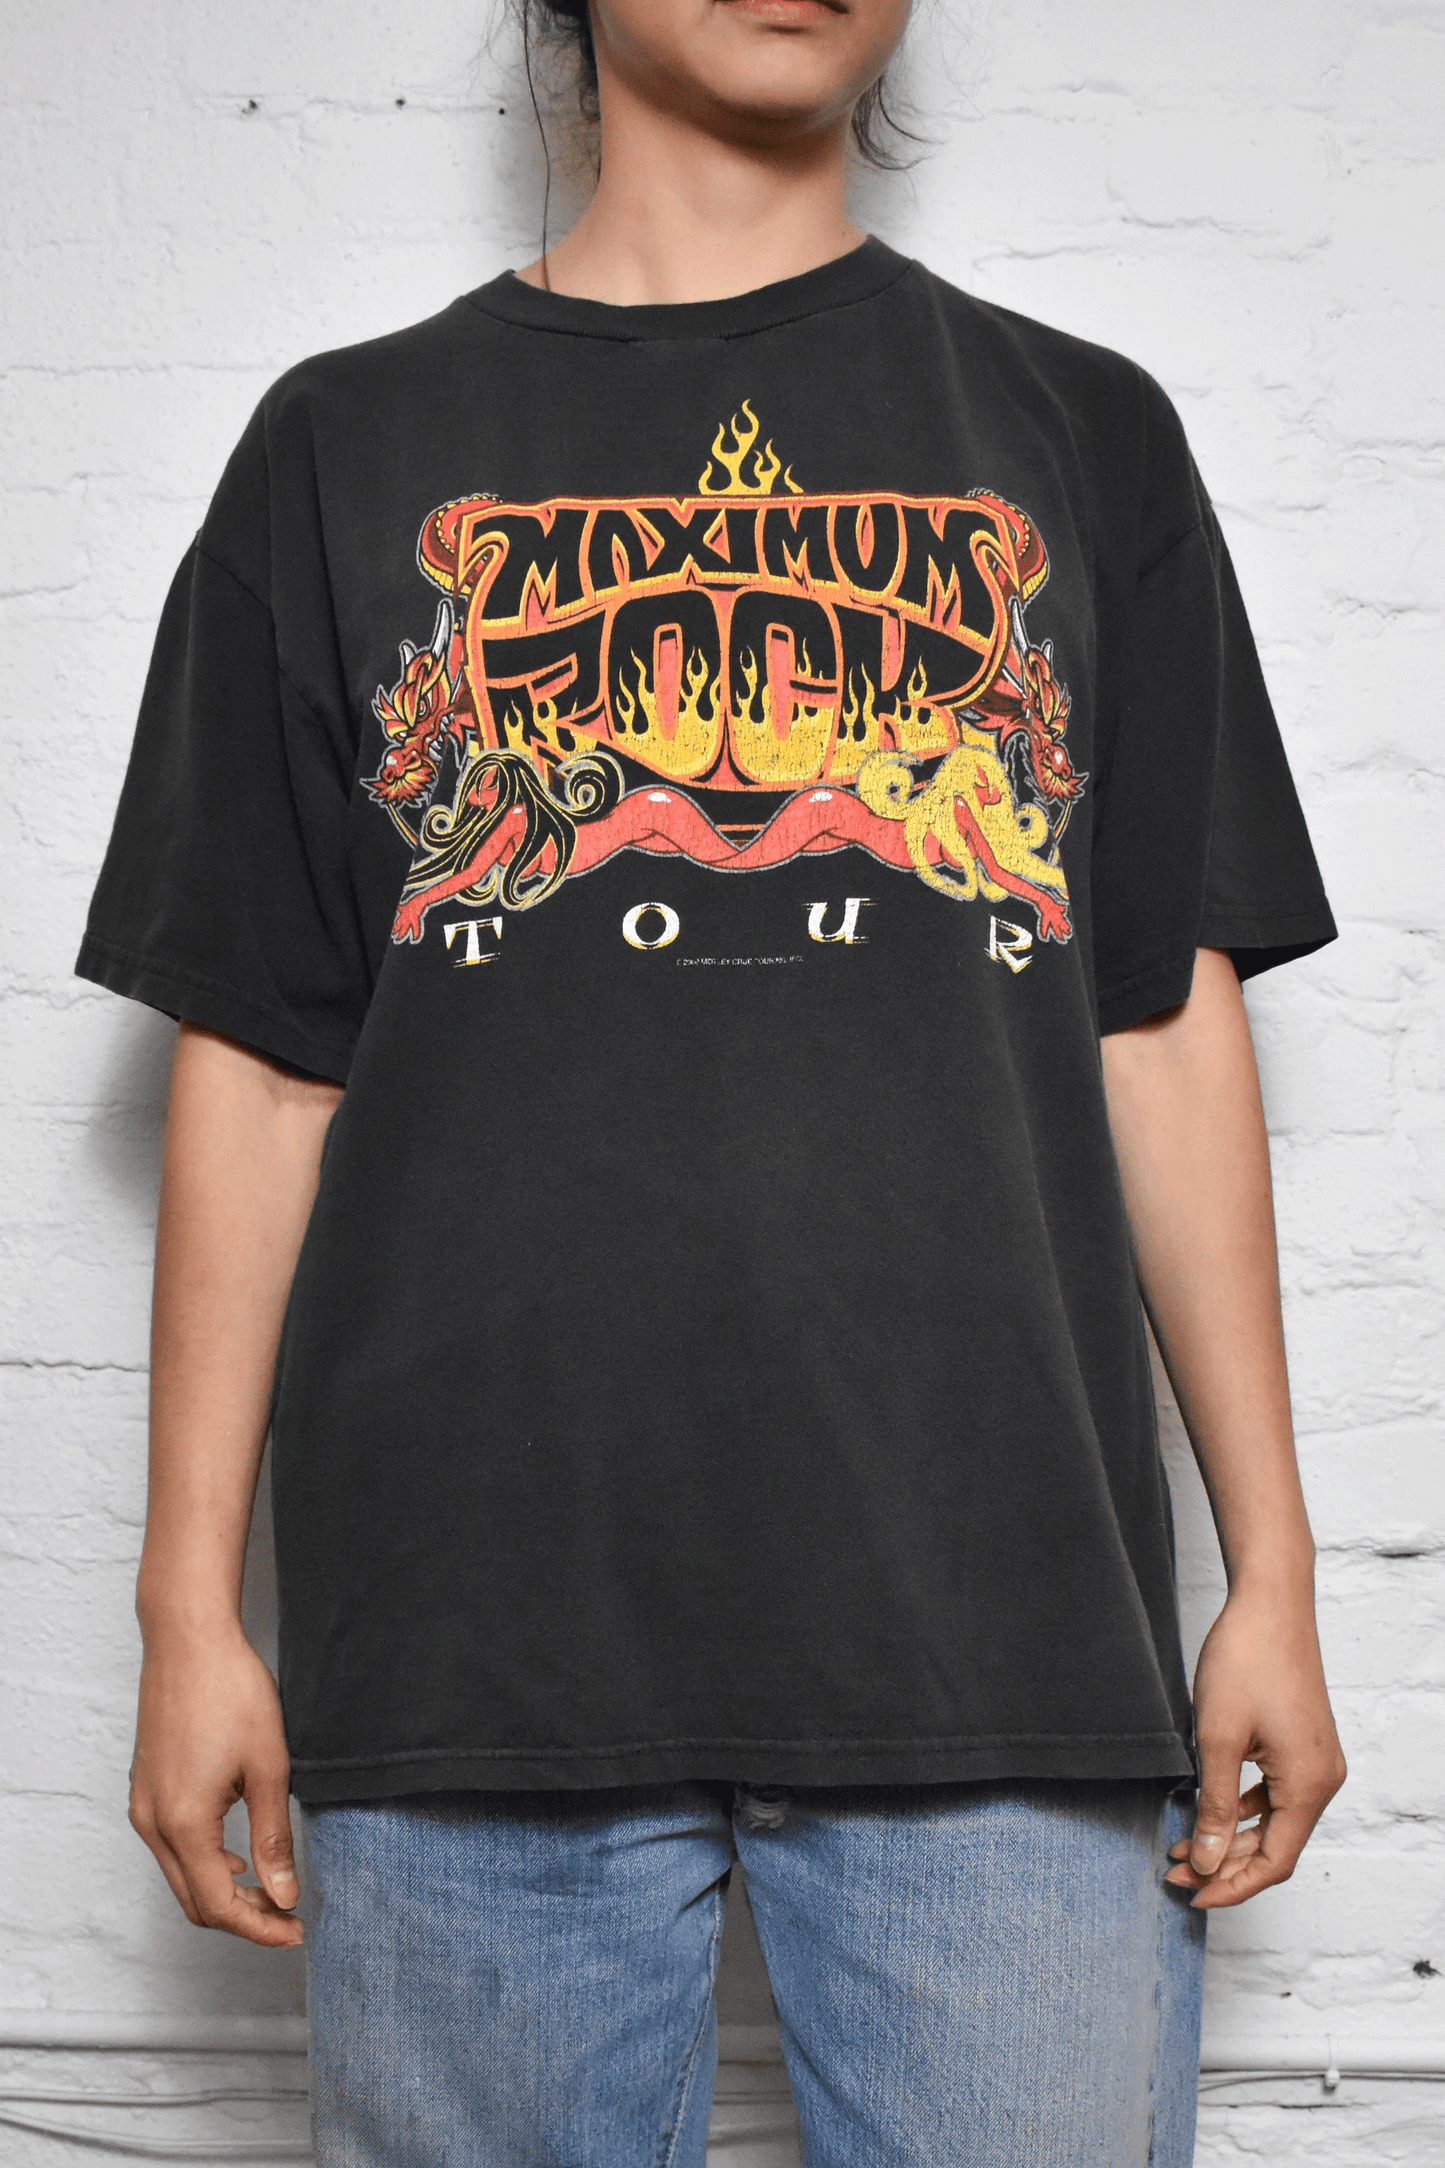 Vintage 2000s Maximus Rock Motley Crue Megadeth Anthrax T-shirt